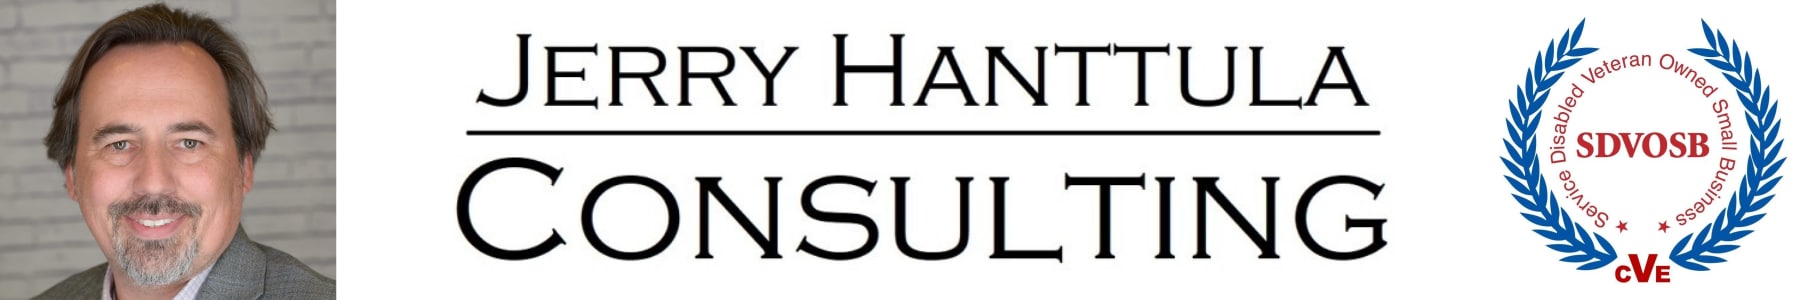 Jerry Hanttula Consulting